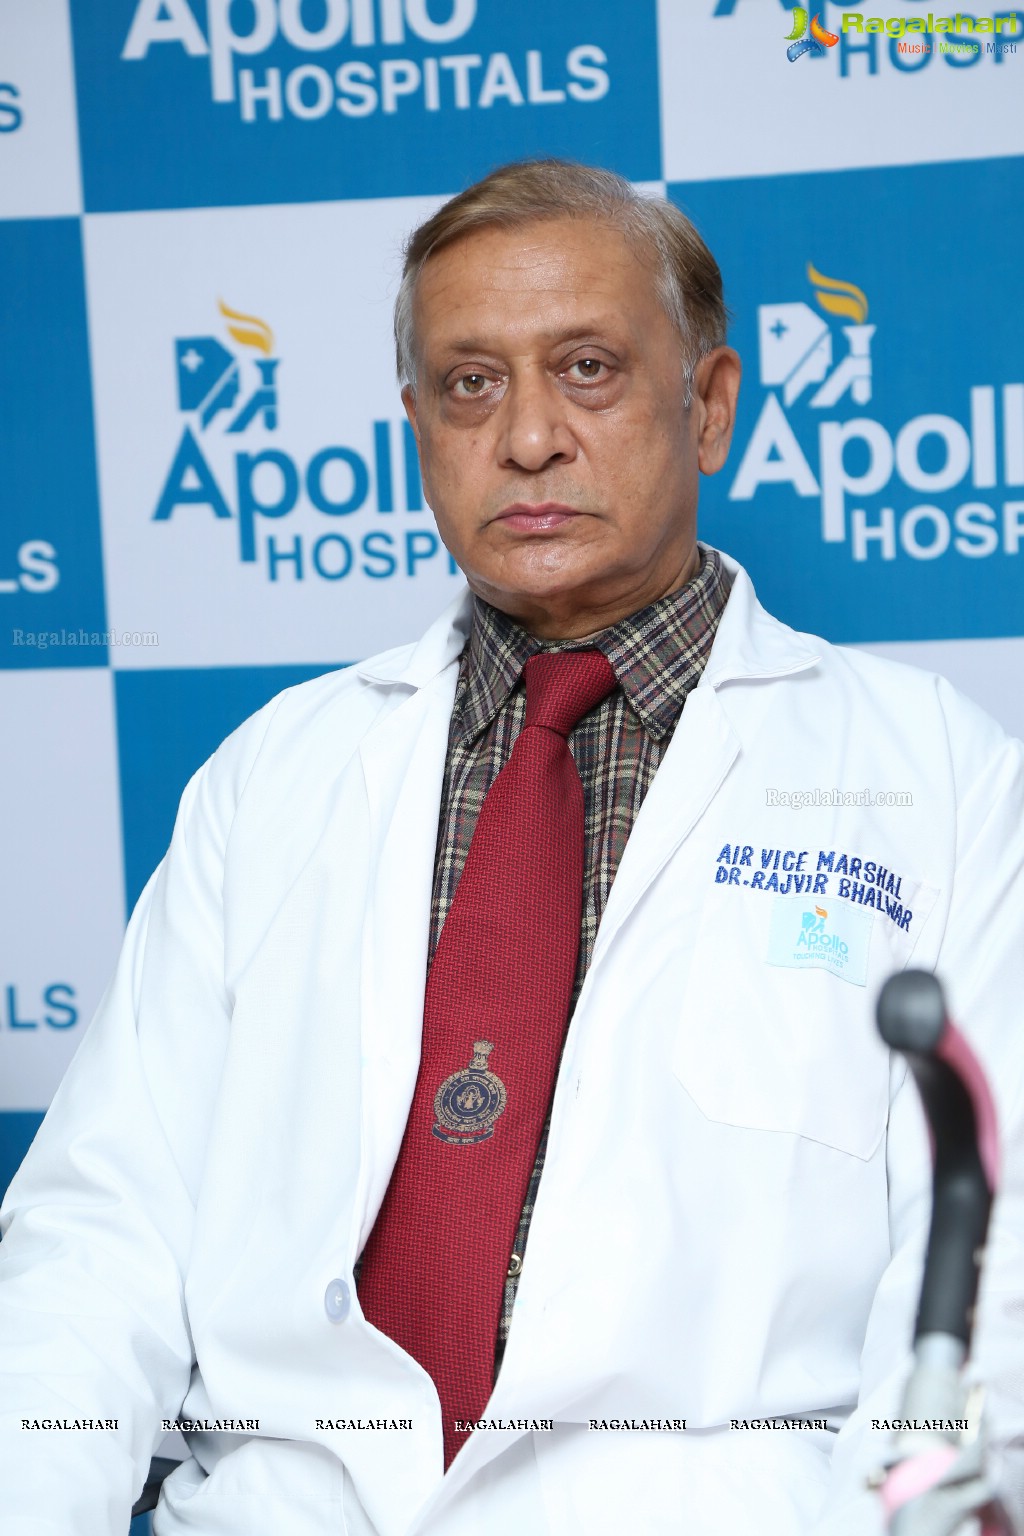 Apollo Hospitals Press Meet at Apollo Hospitals, Jubilee Hills, Hyderabad